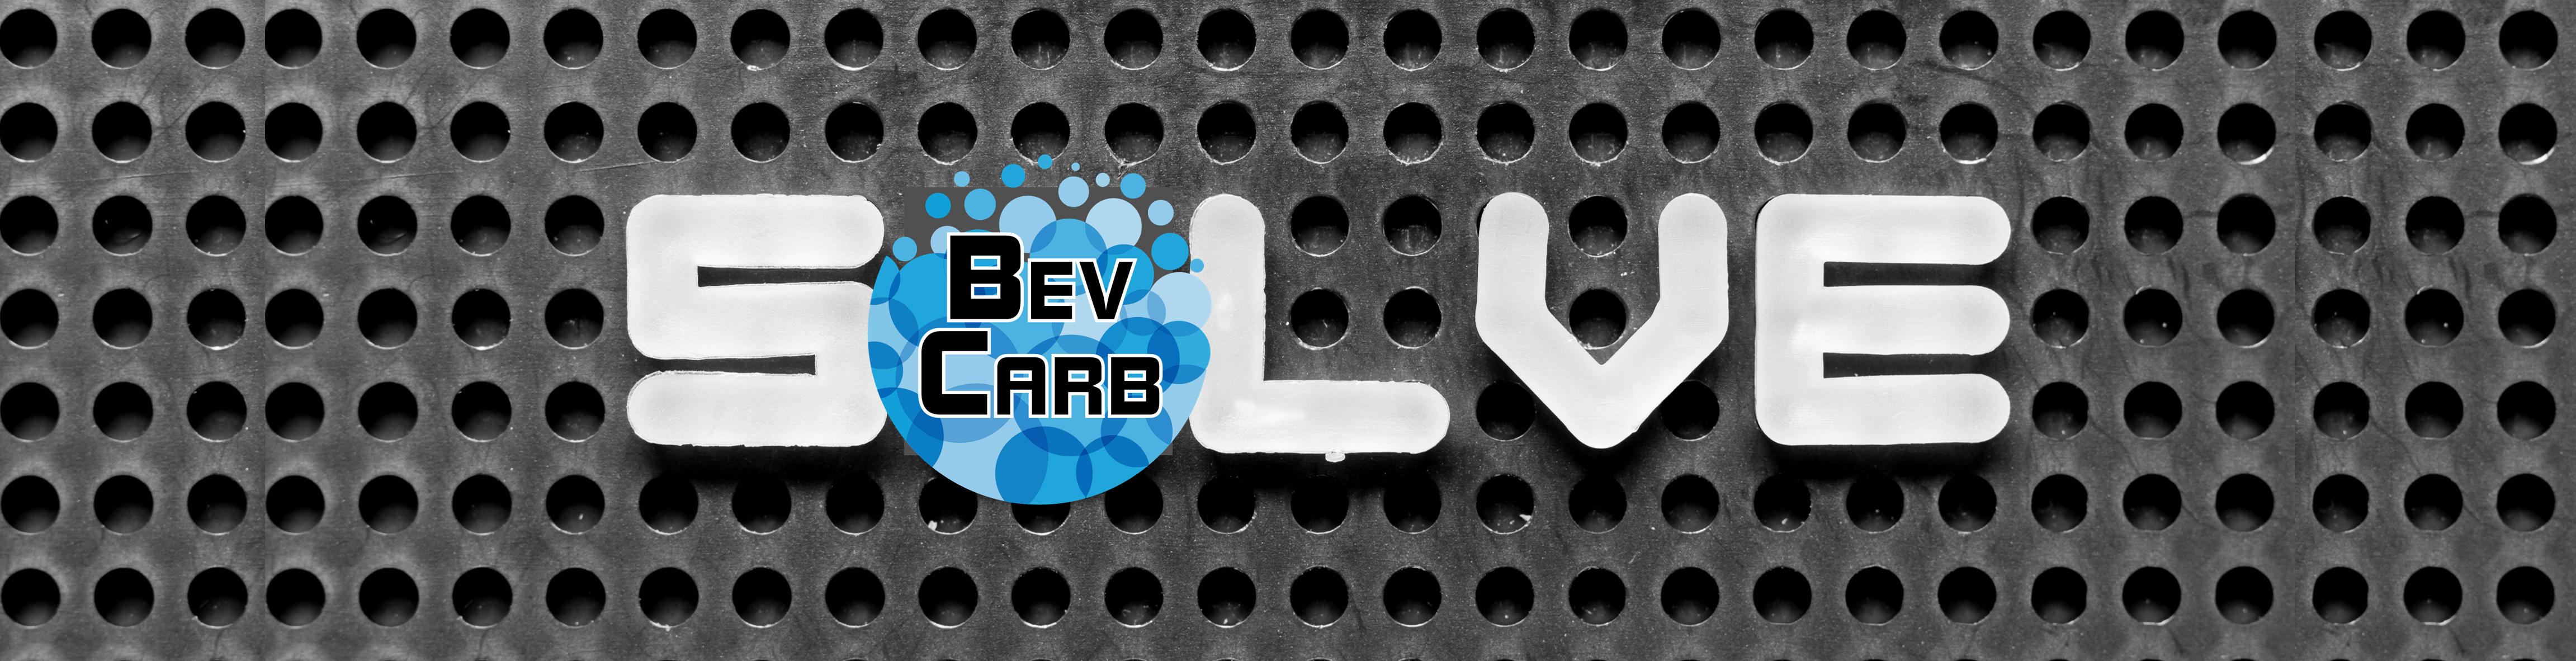 BevCarbSolve2